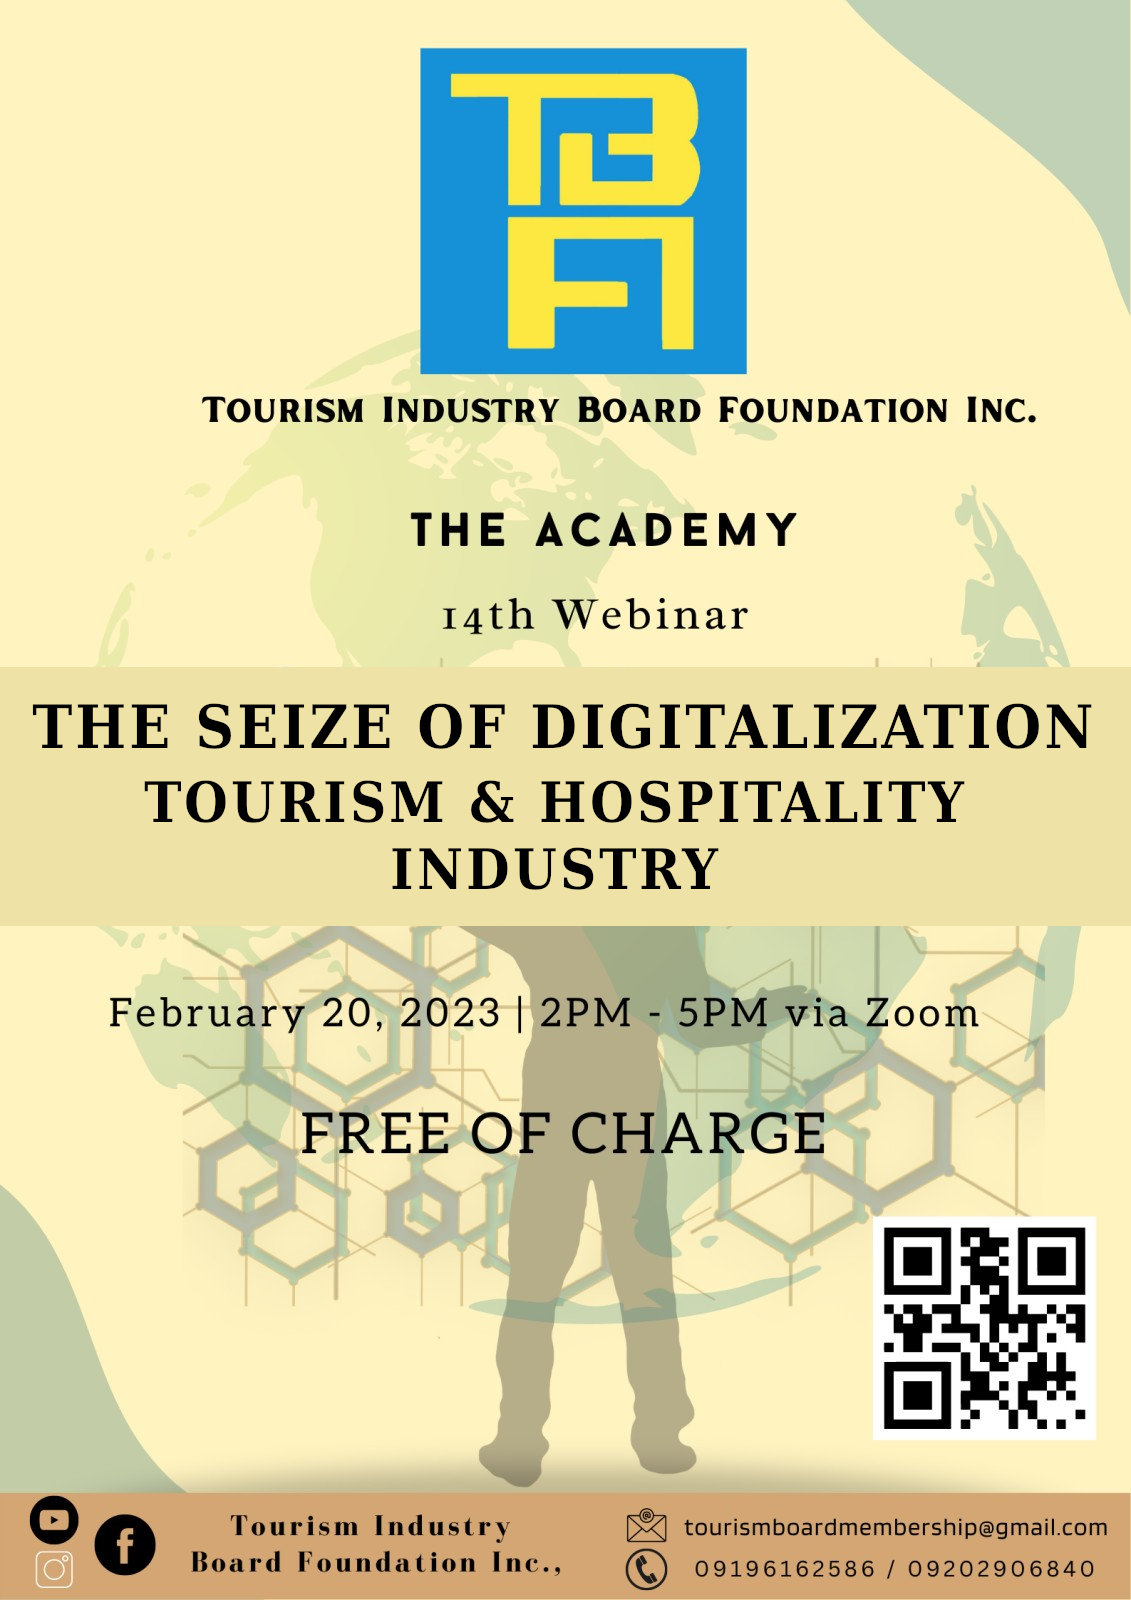 The Seize of Digitalization: Tourism & Hospitality Industry (February 20, 2023)